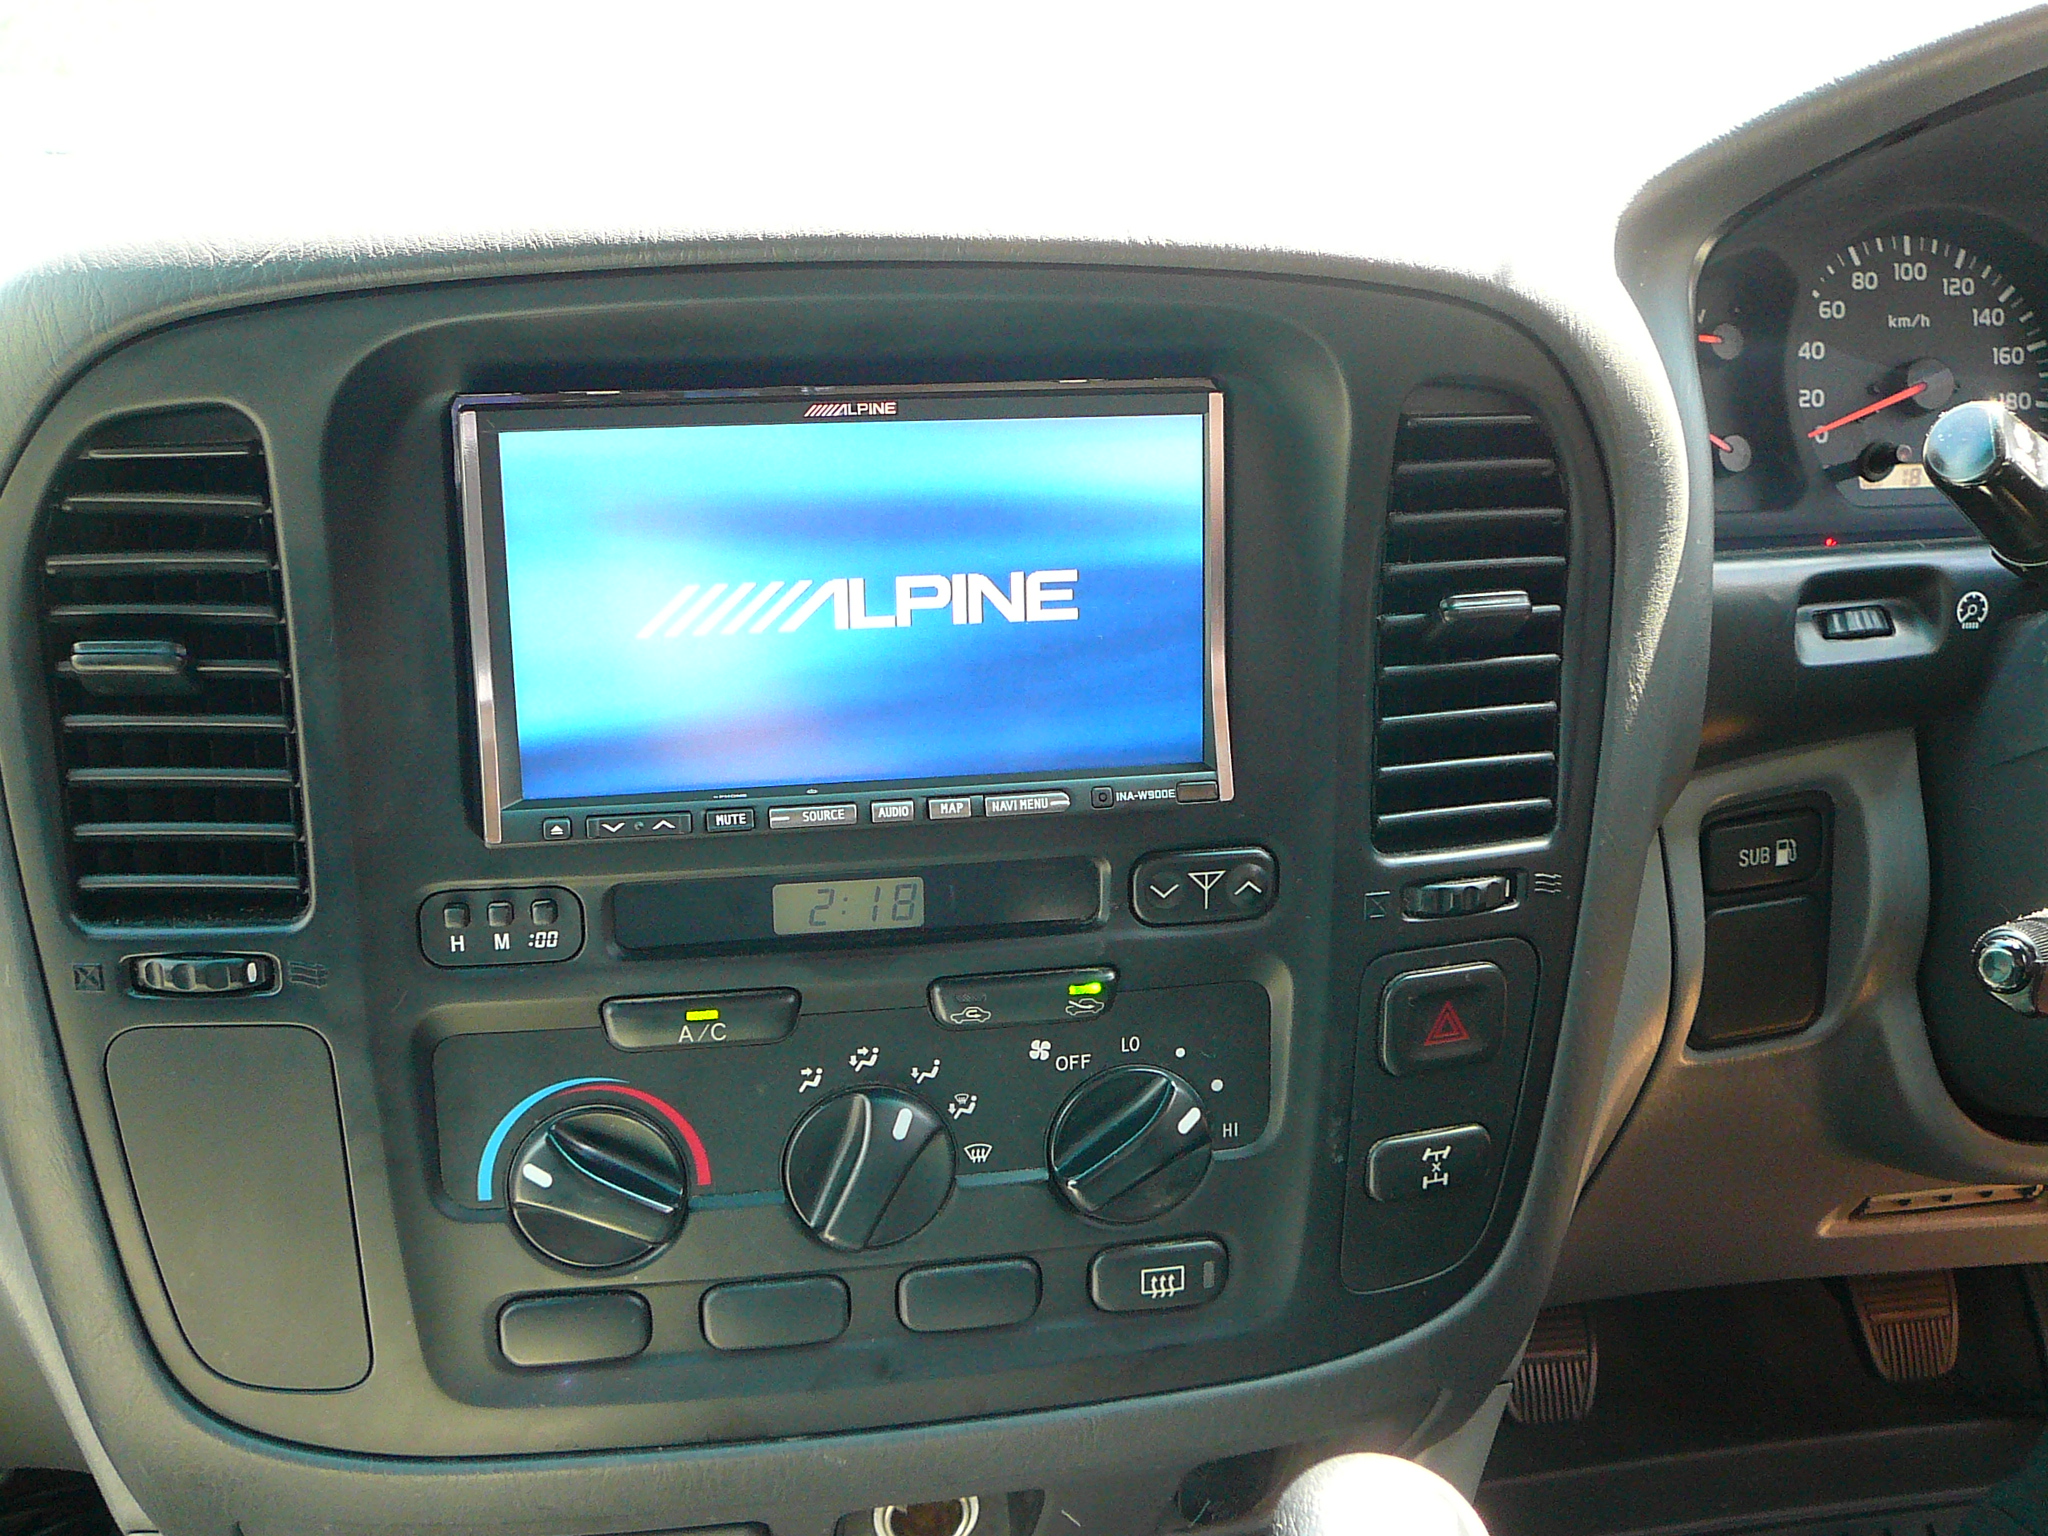 Toyota Landcruiser 100 Series, with Alpine GPS Navigation install